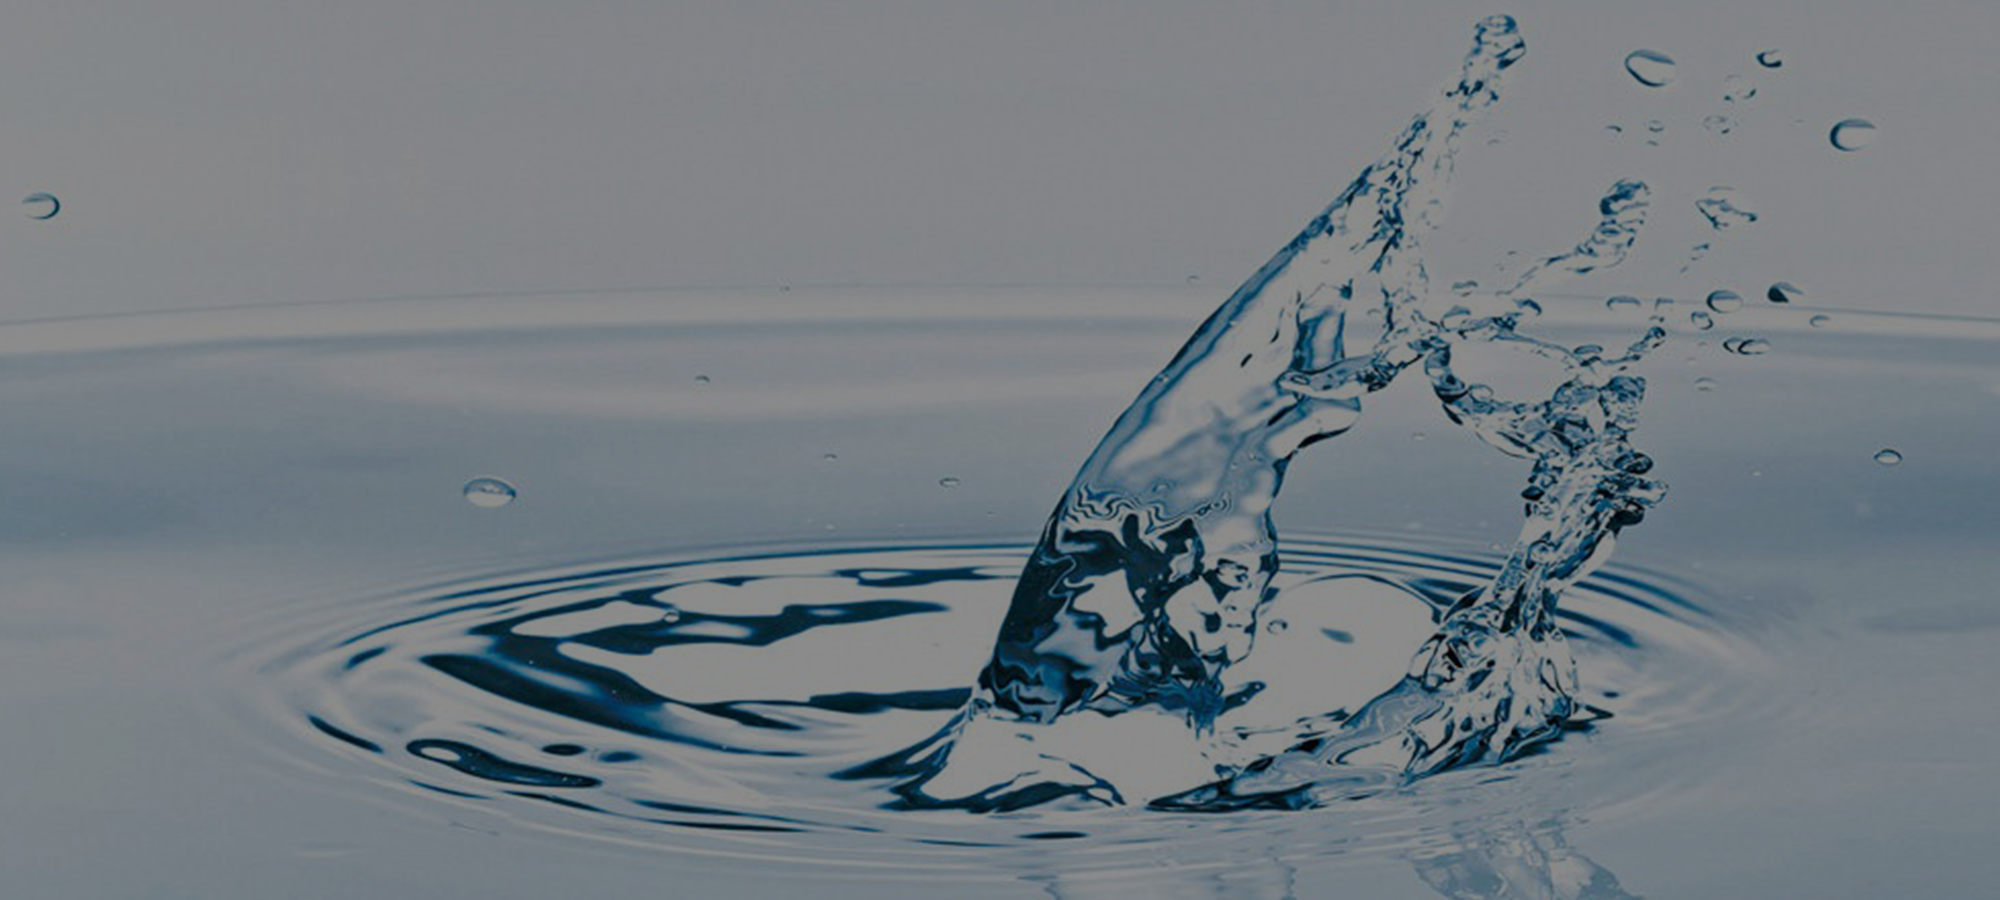 Close-up of Water Splashing Concept Image